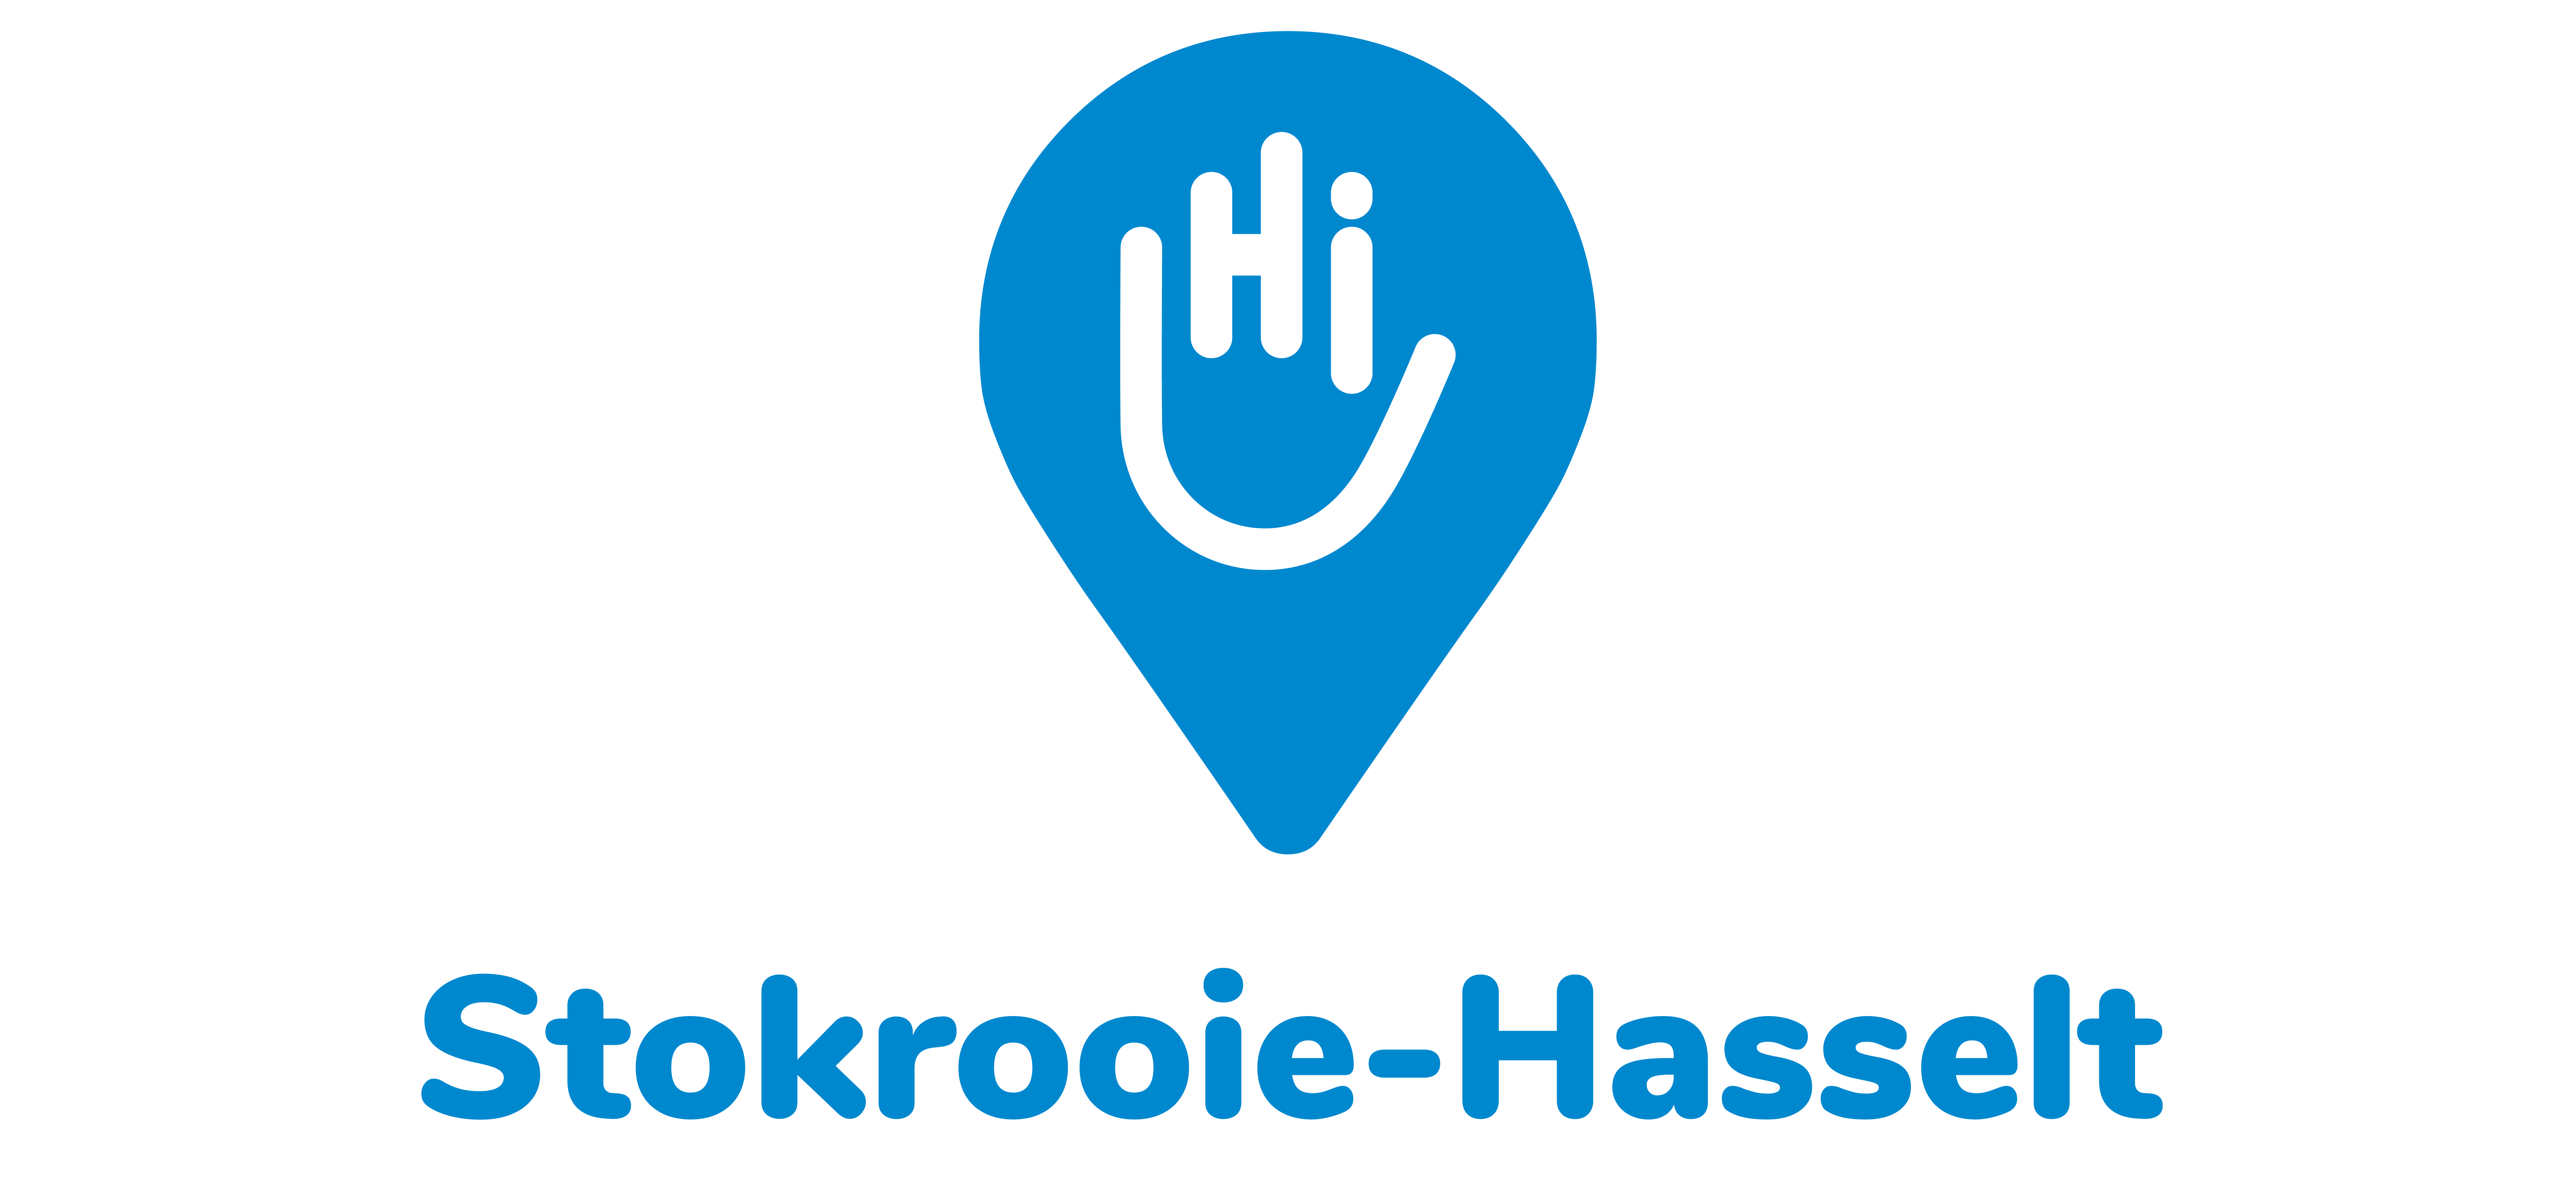 Signalétique Stokrooie-Hasselt